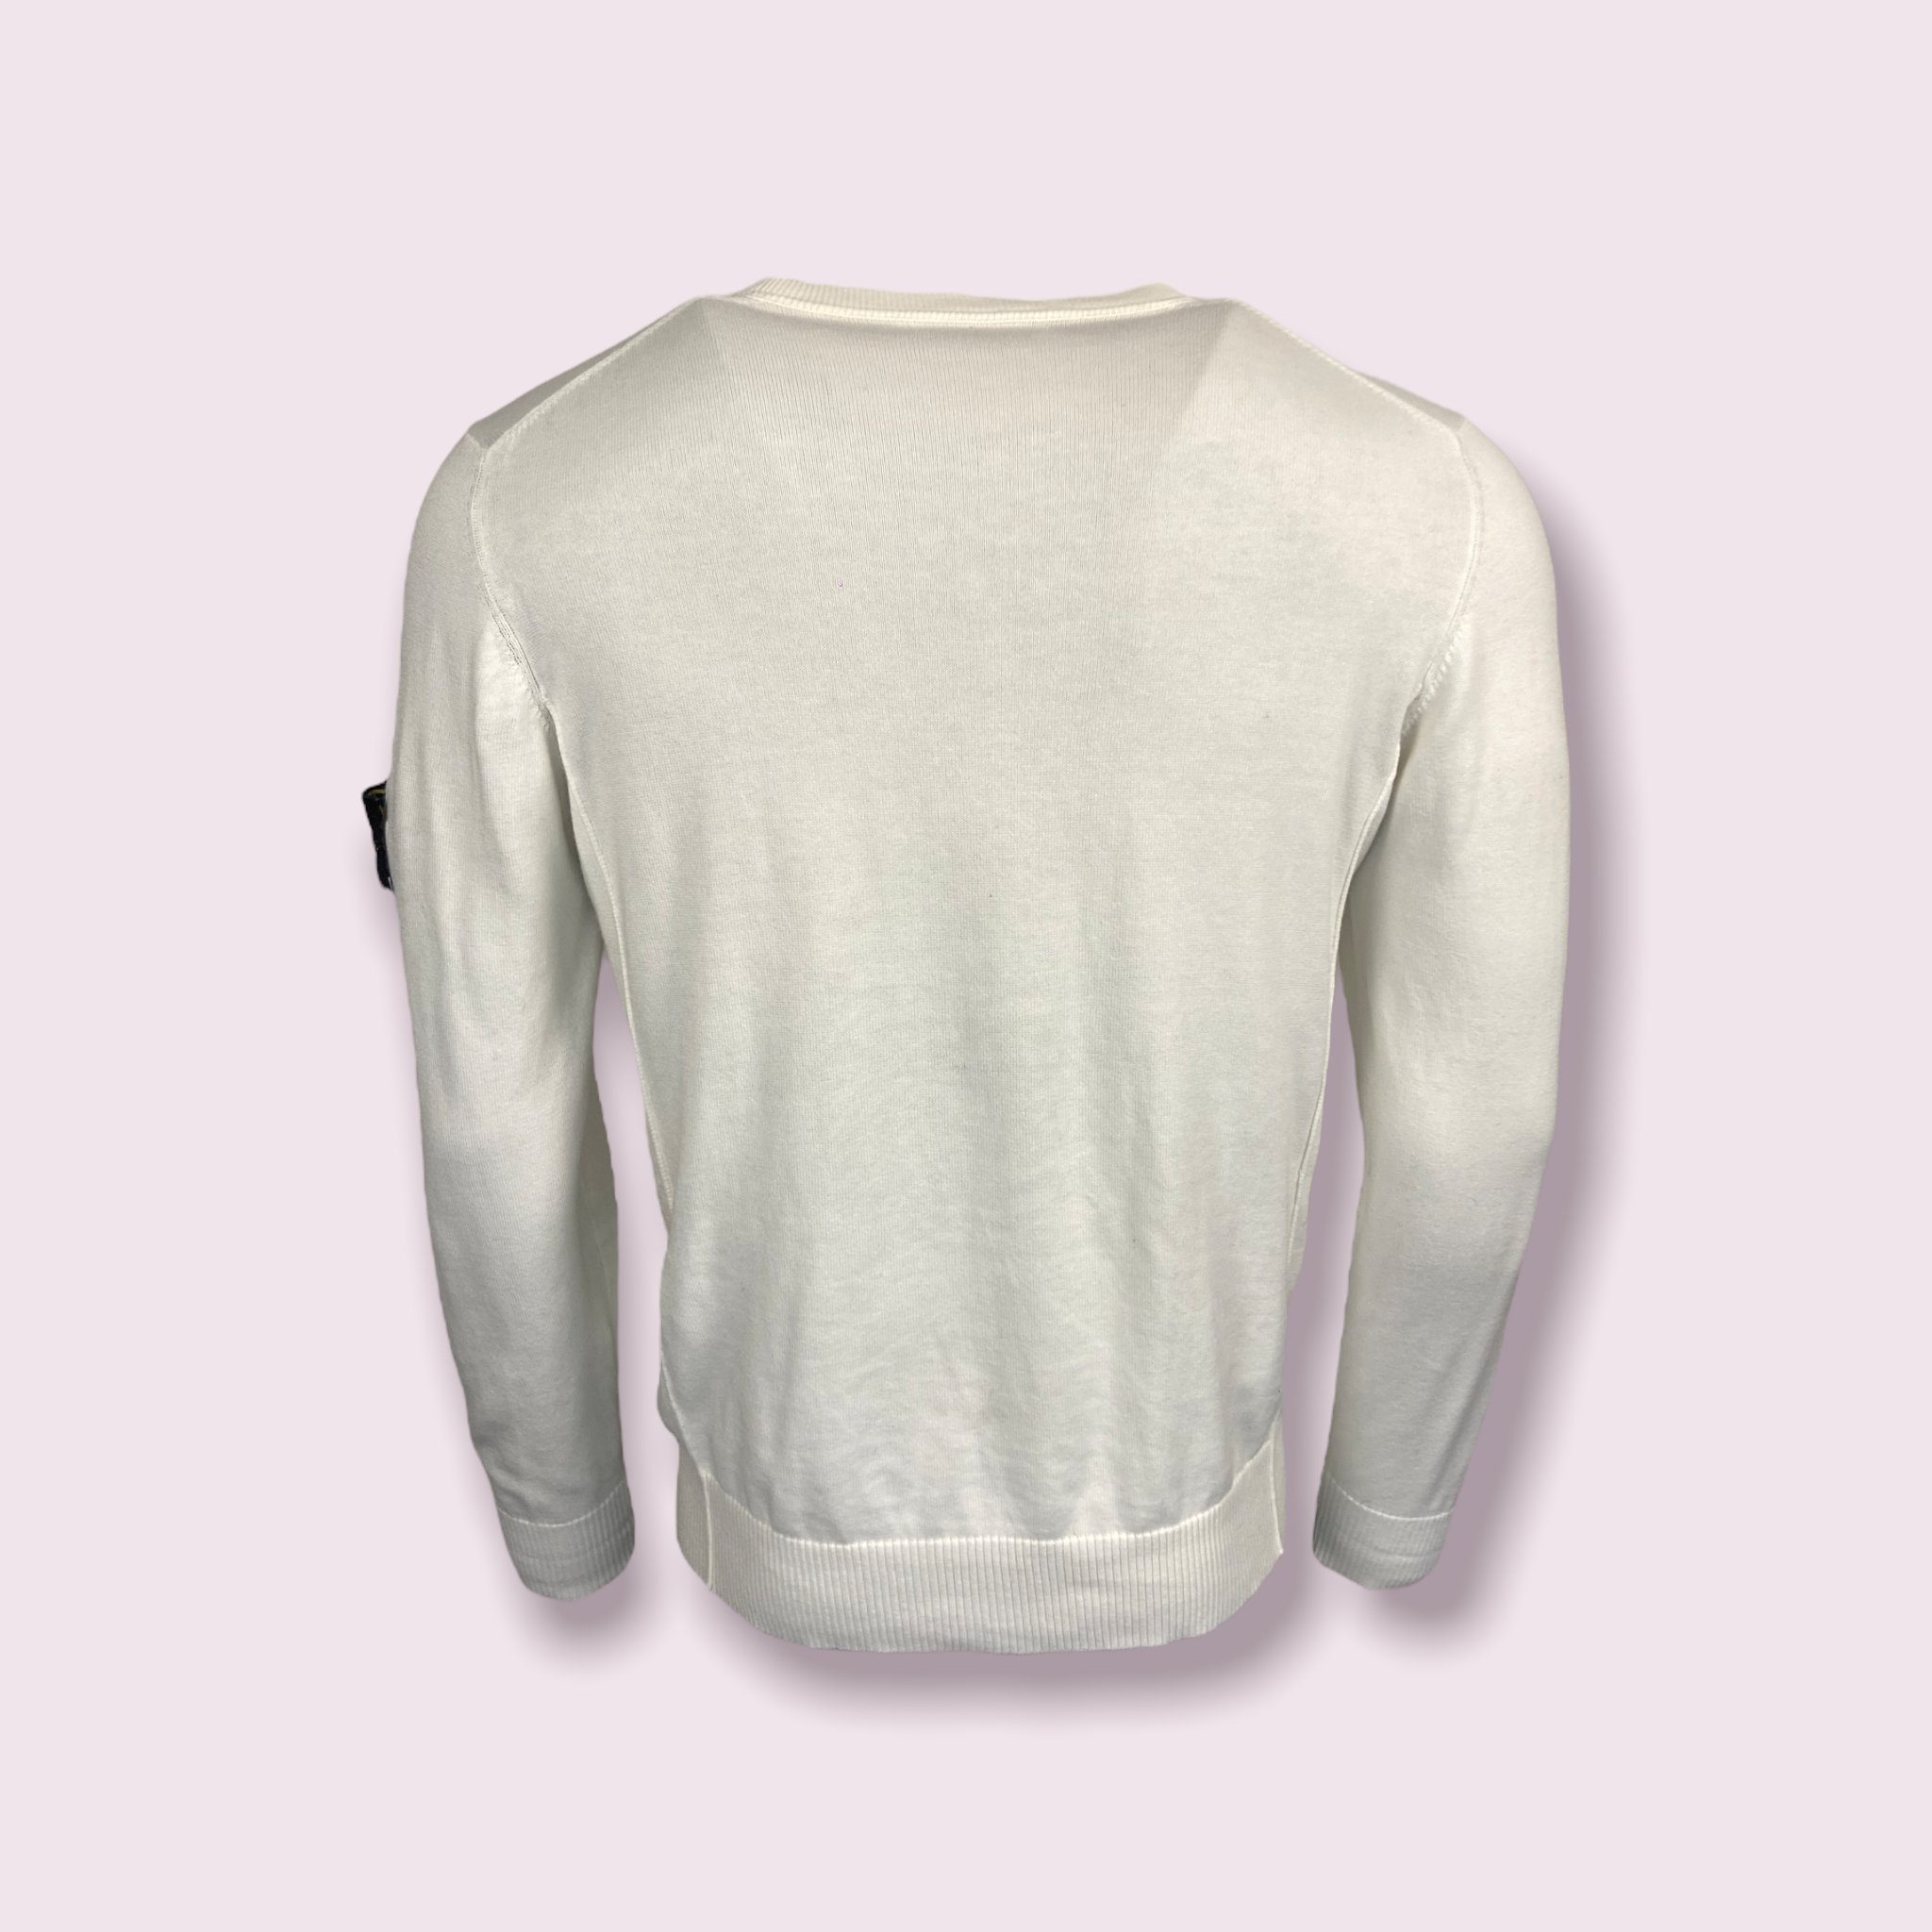 Stone Island Knit Sweatshirt - Size L